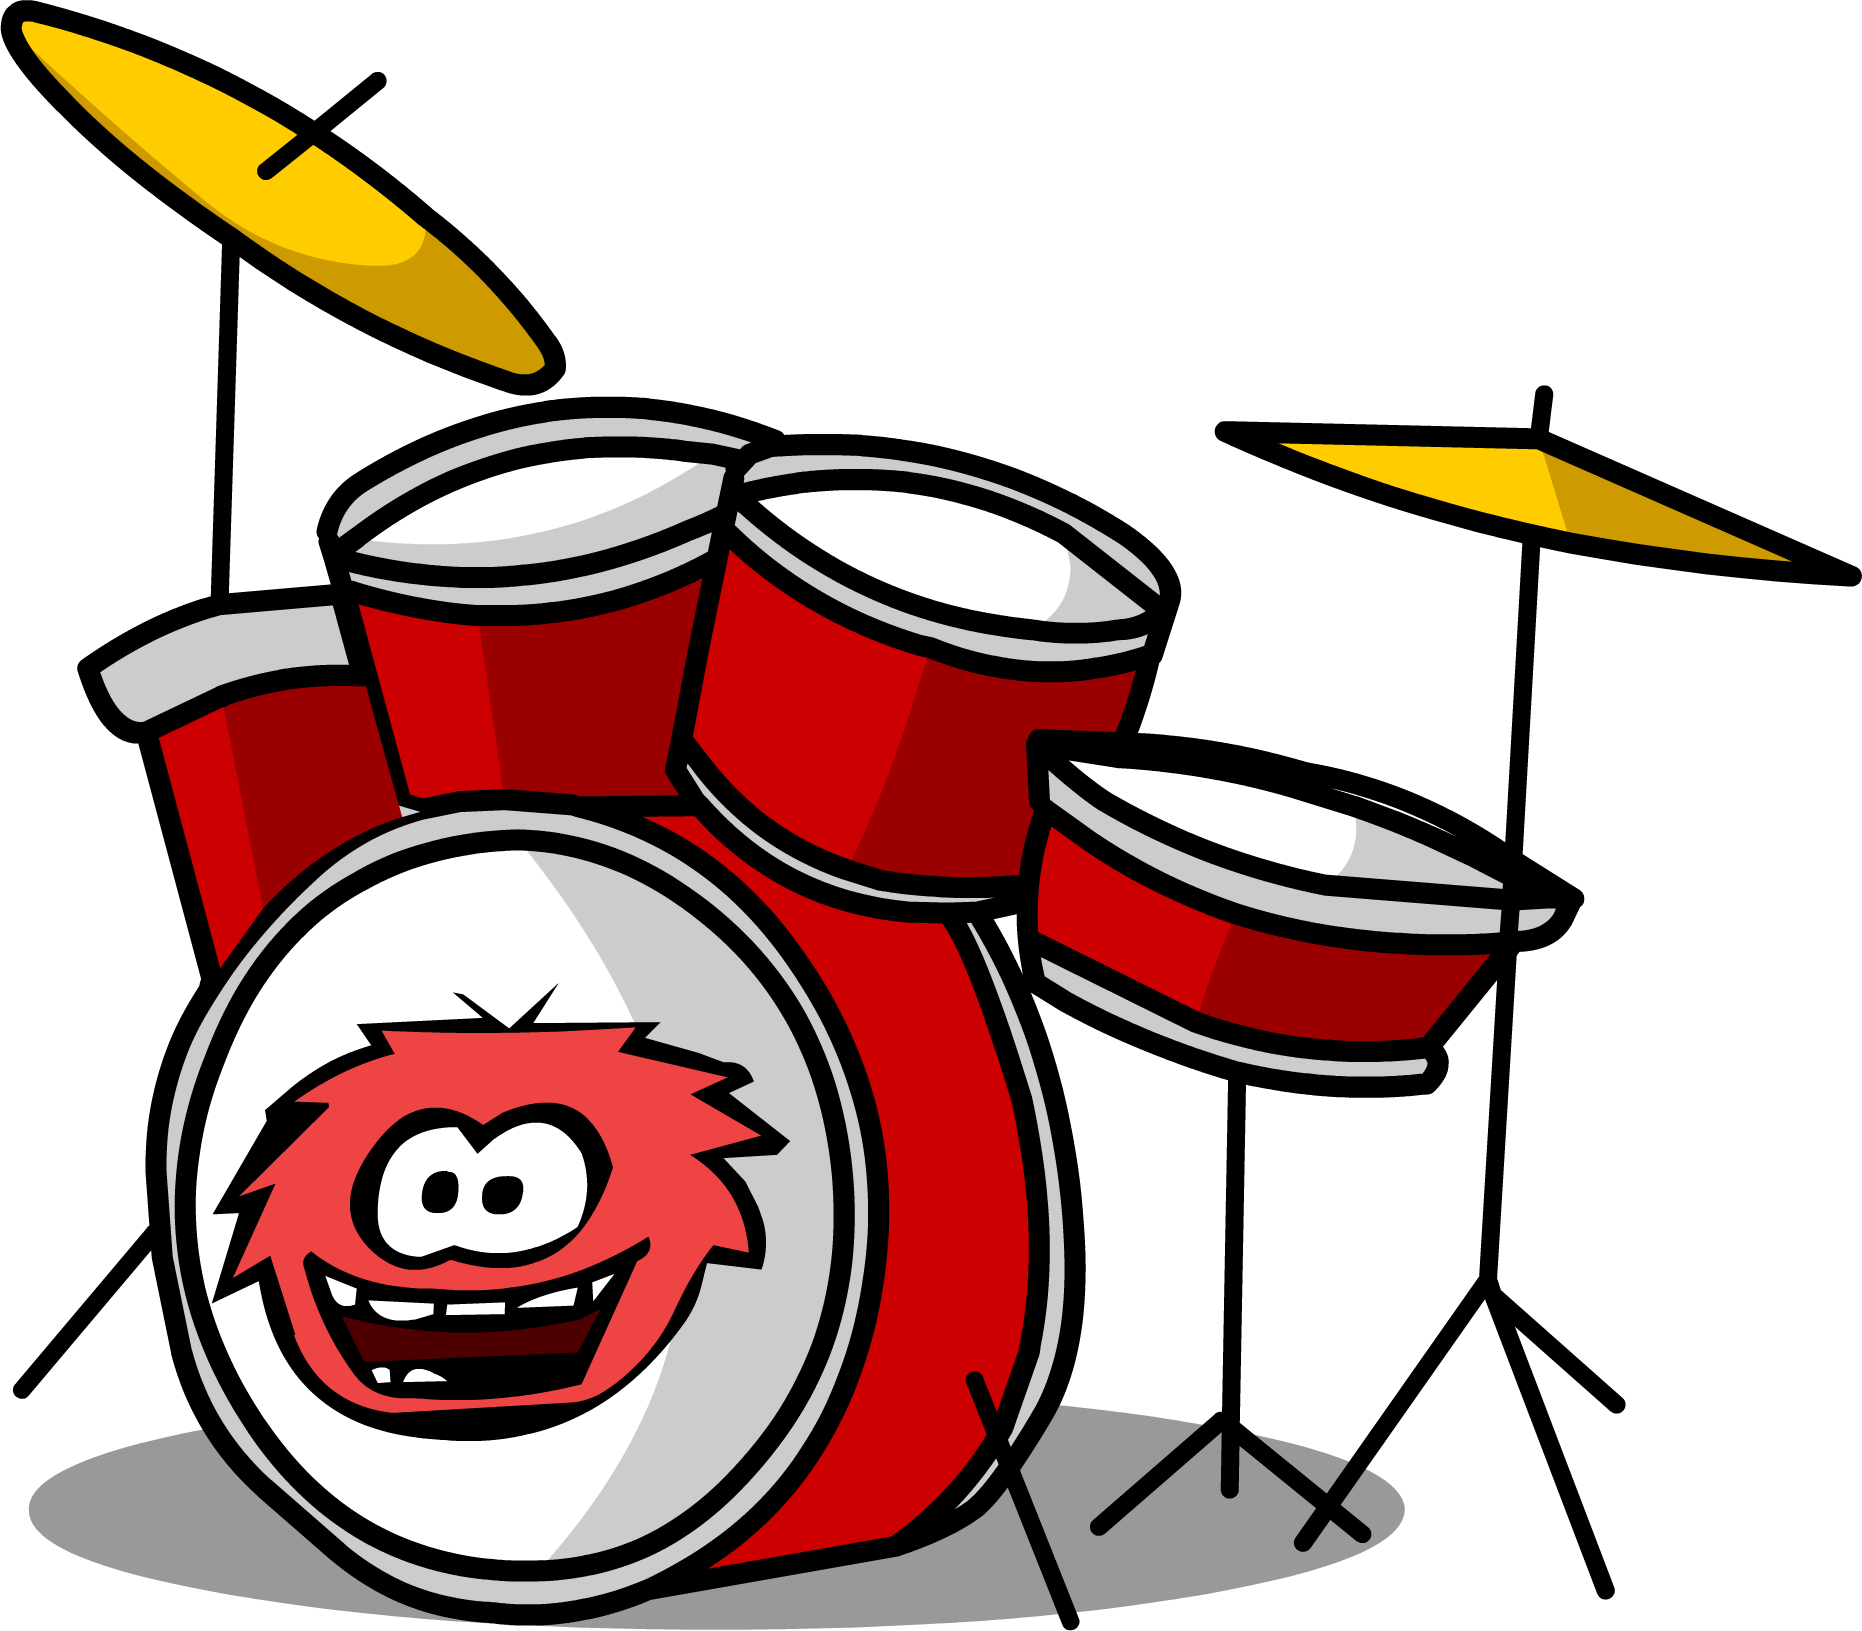 Drum Kit Sprite 005 - Cartoon Drum Kit Png (1862x1631)